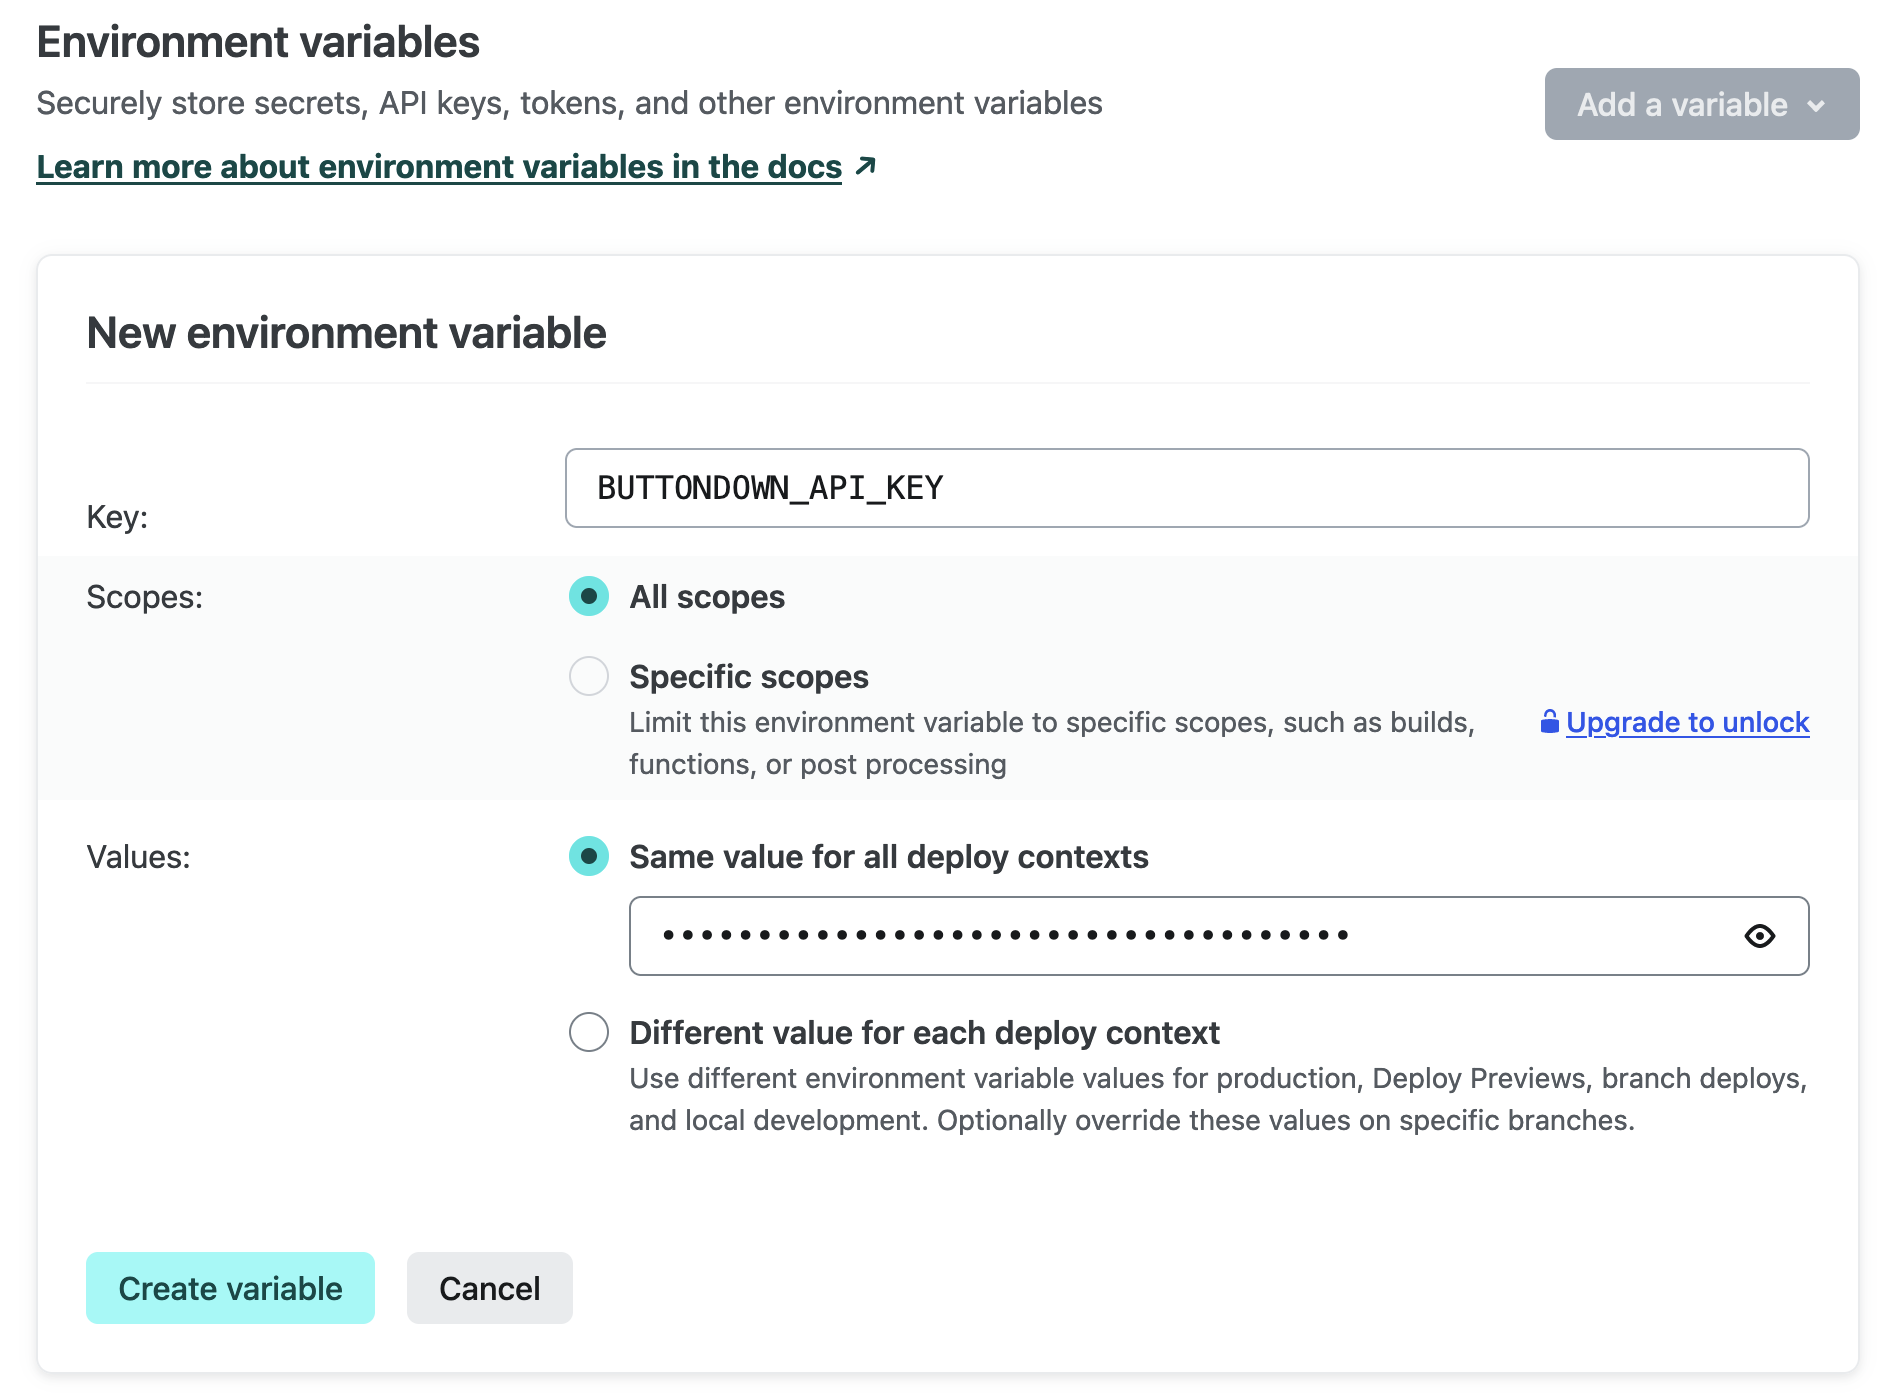 Add the Buttondown API key as an environment variable